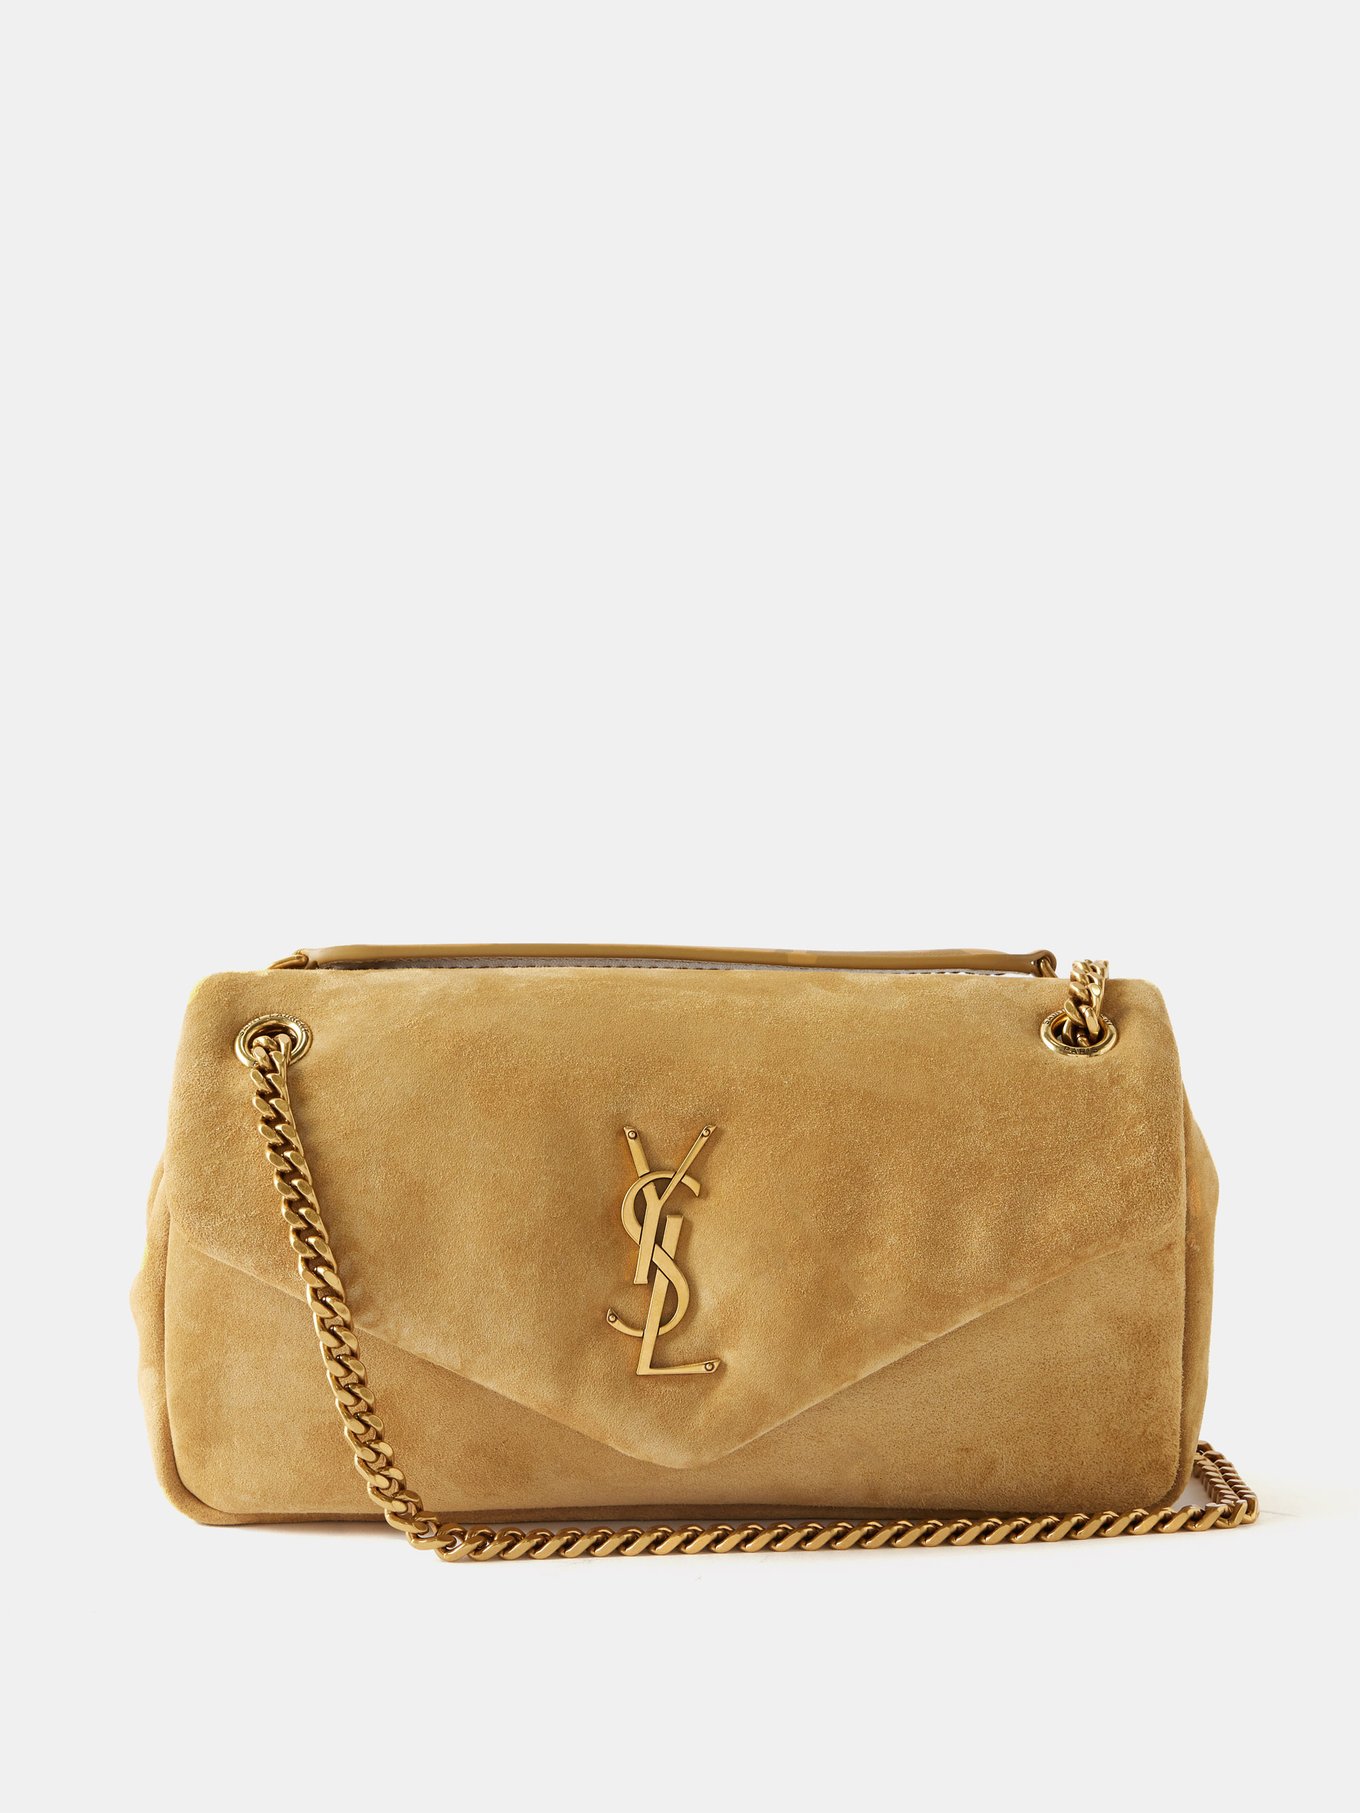 Saint Laurent Calypso Ysl Leather Chain Shoulder Bag